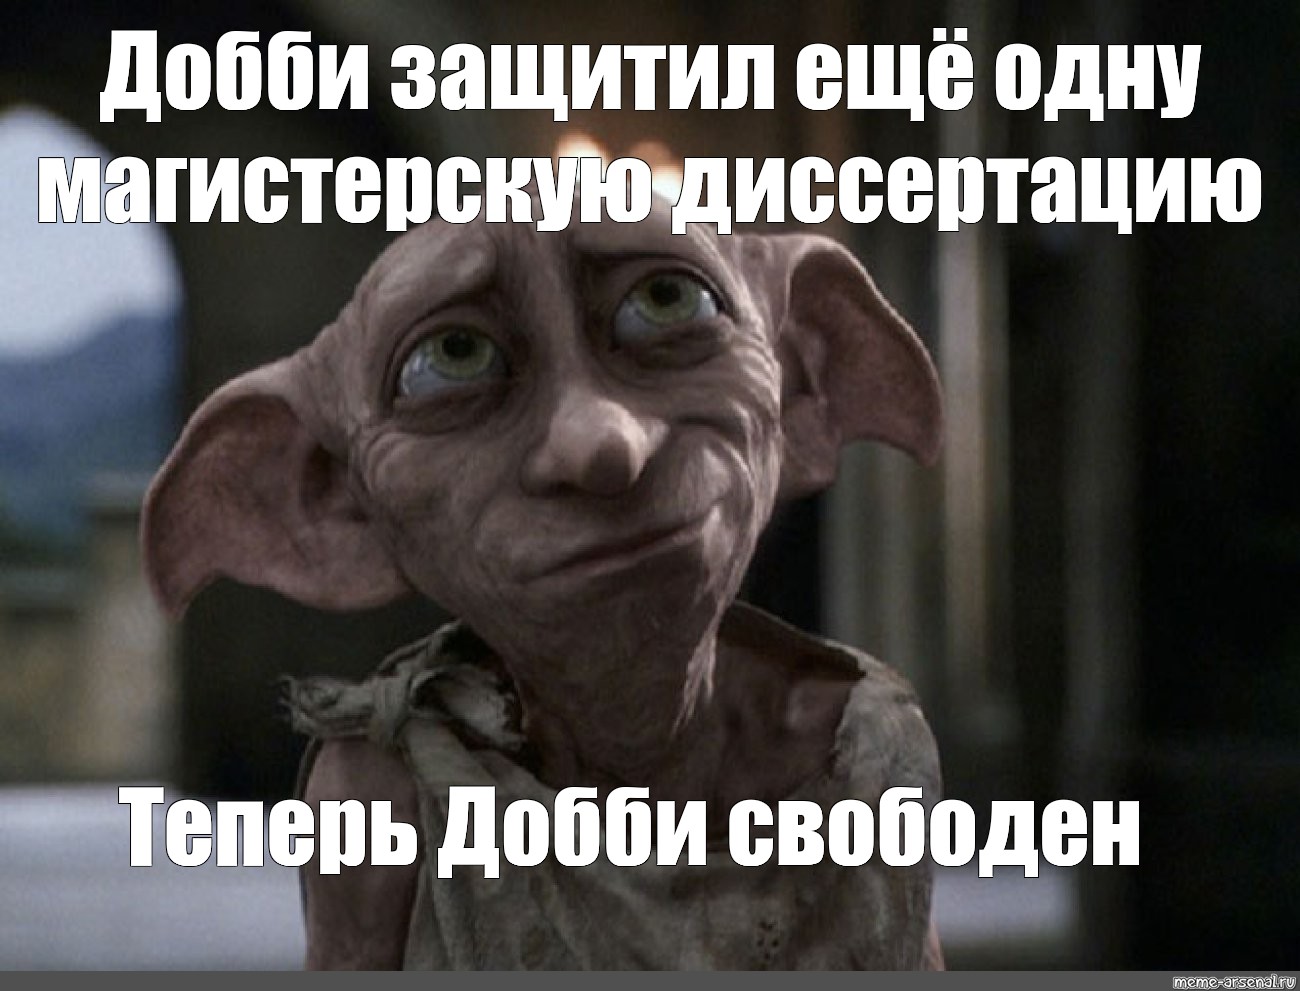 Meme: "Dobby from Harry, the house elf Dobby, Dobby from Harry Potter&...